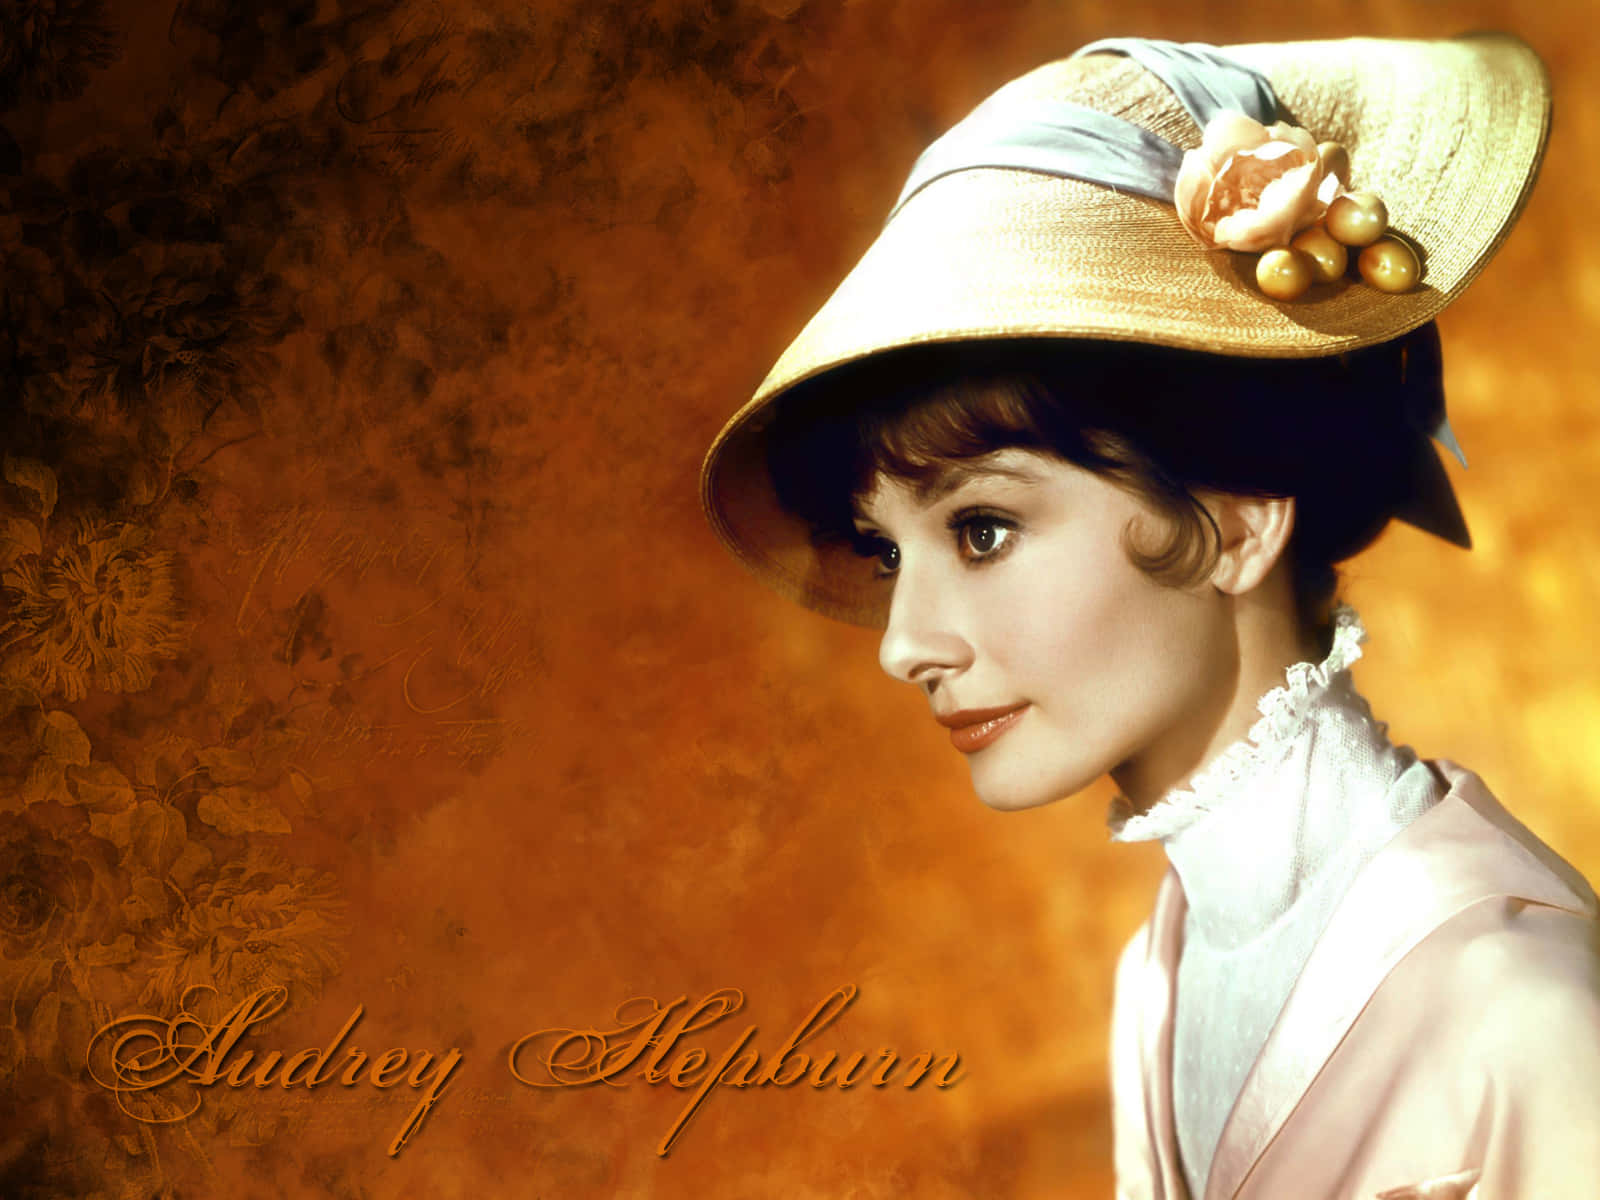 Audrey Hepburn, A Style Icon